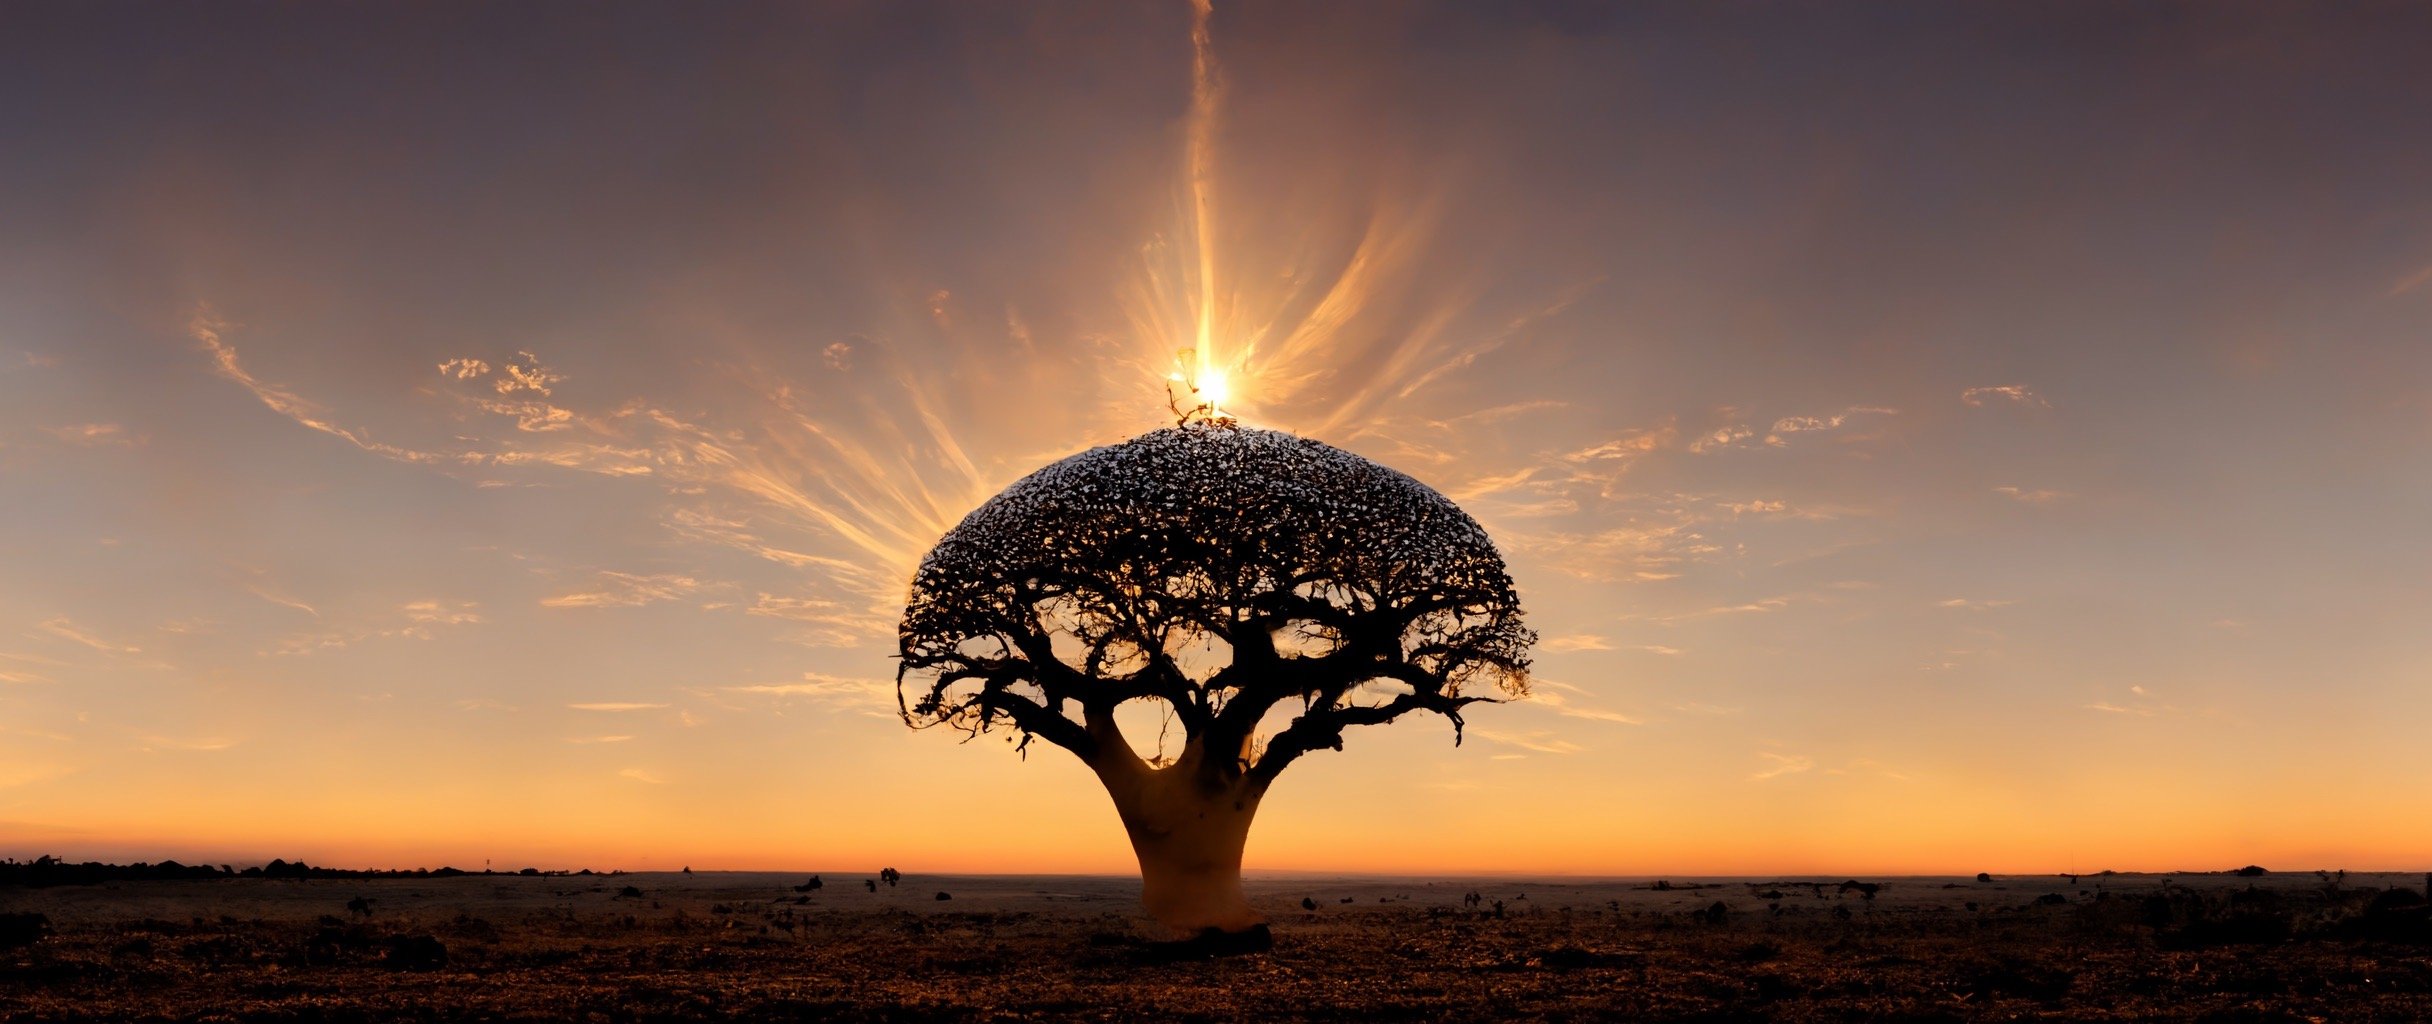 de5faecf-2453-4f5a-9019-f2a05929e4cc_S3RAPH_lone_magical_Baobab_tree_of_life_center_sunset_cinematic_composition_8k_render_w_2048_h_858.JPG